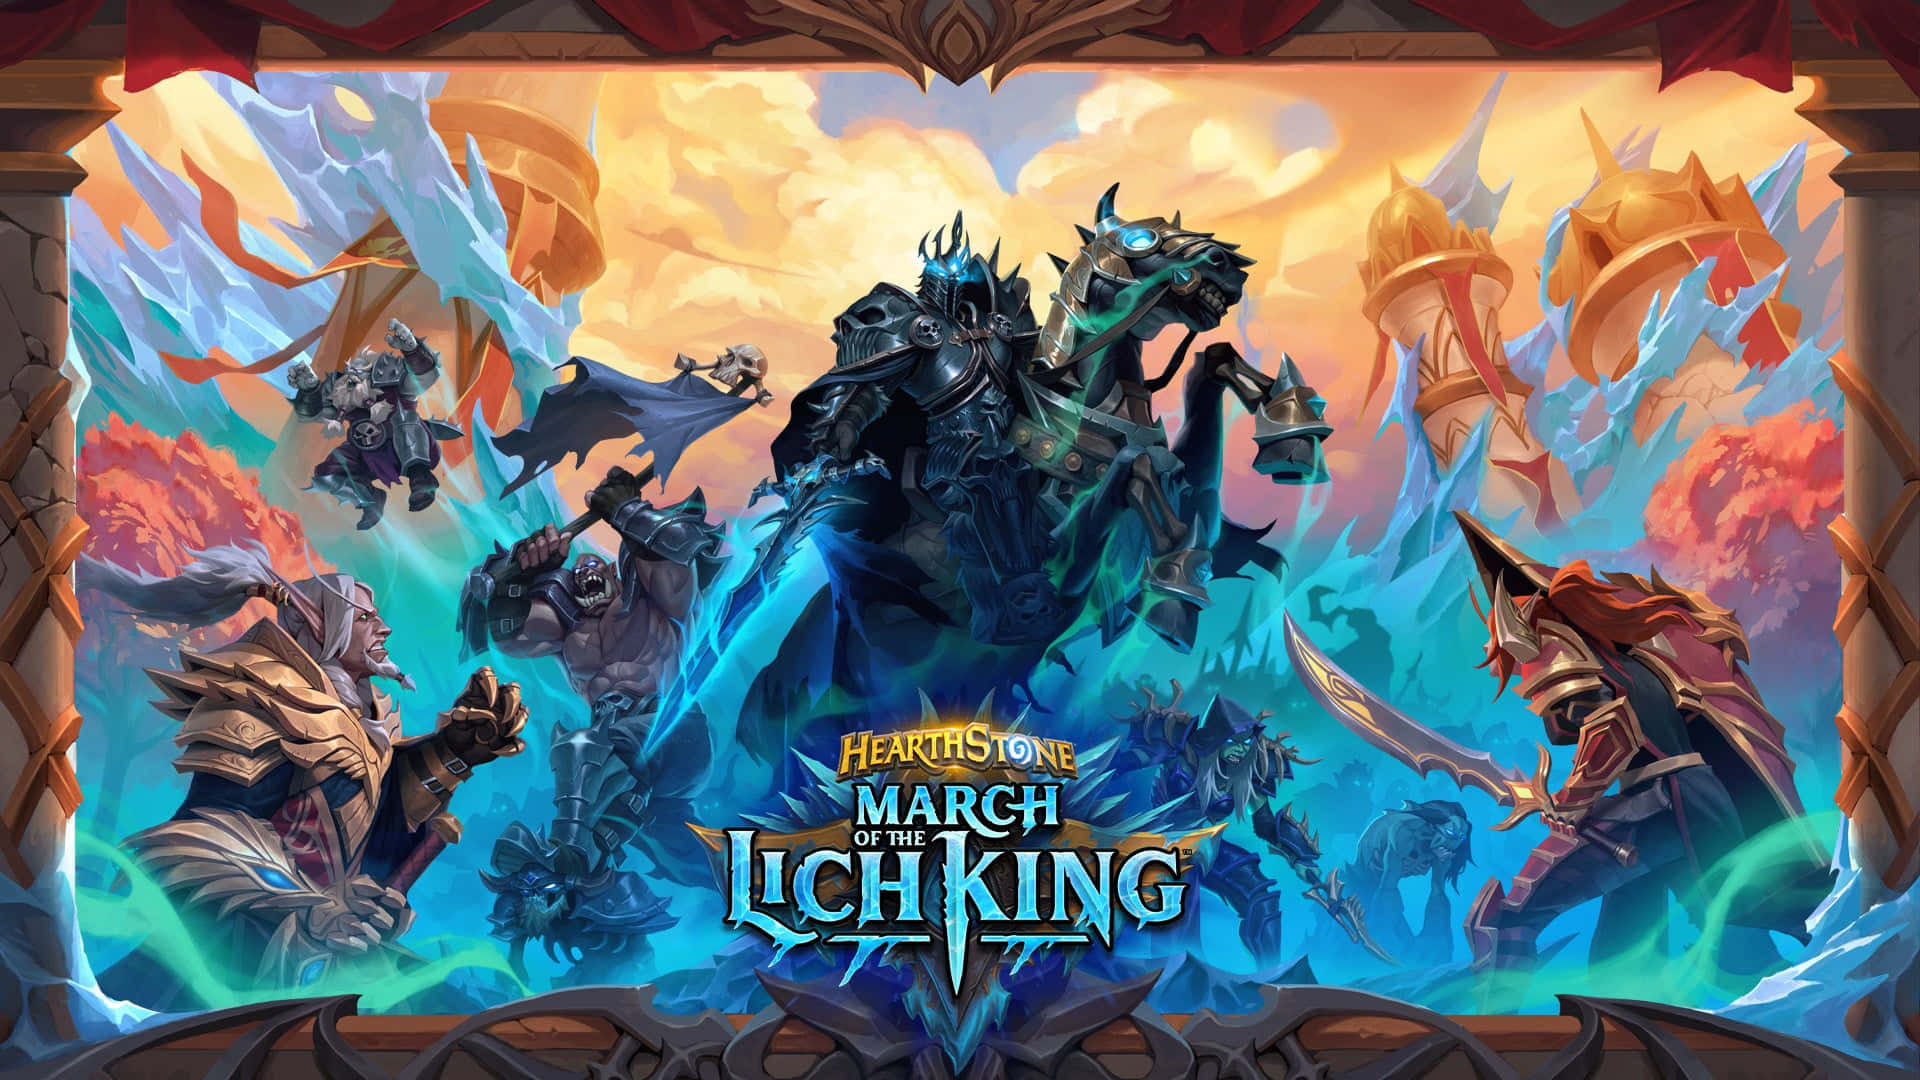 Omslagetpå Spelet King Of Liking.